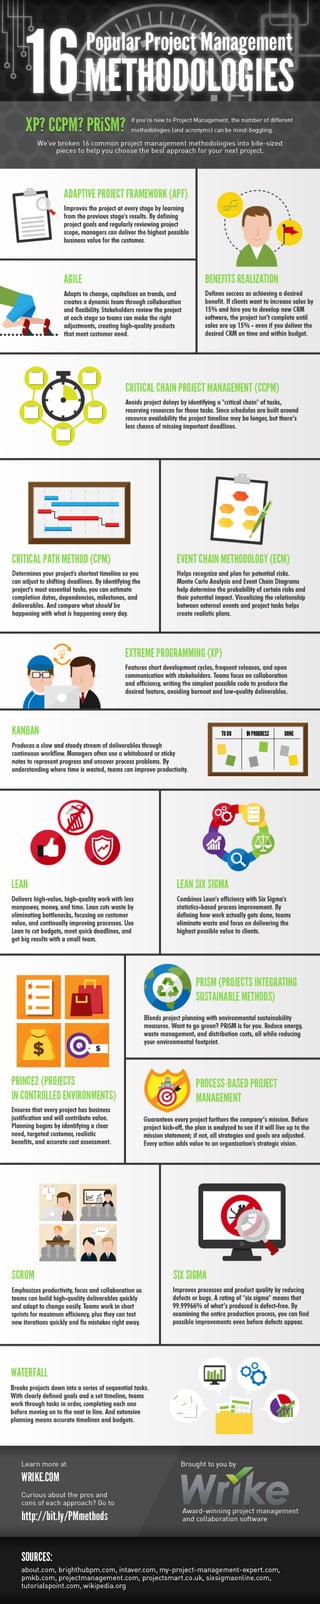 16 Popular Project Management Methodologies (Infographic)